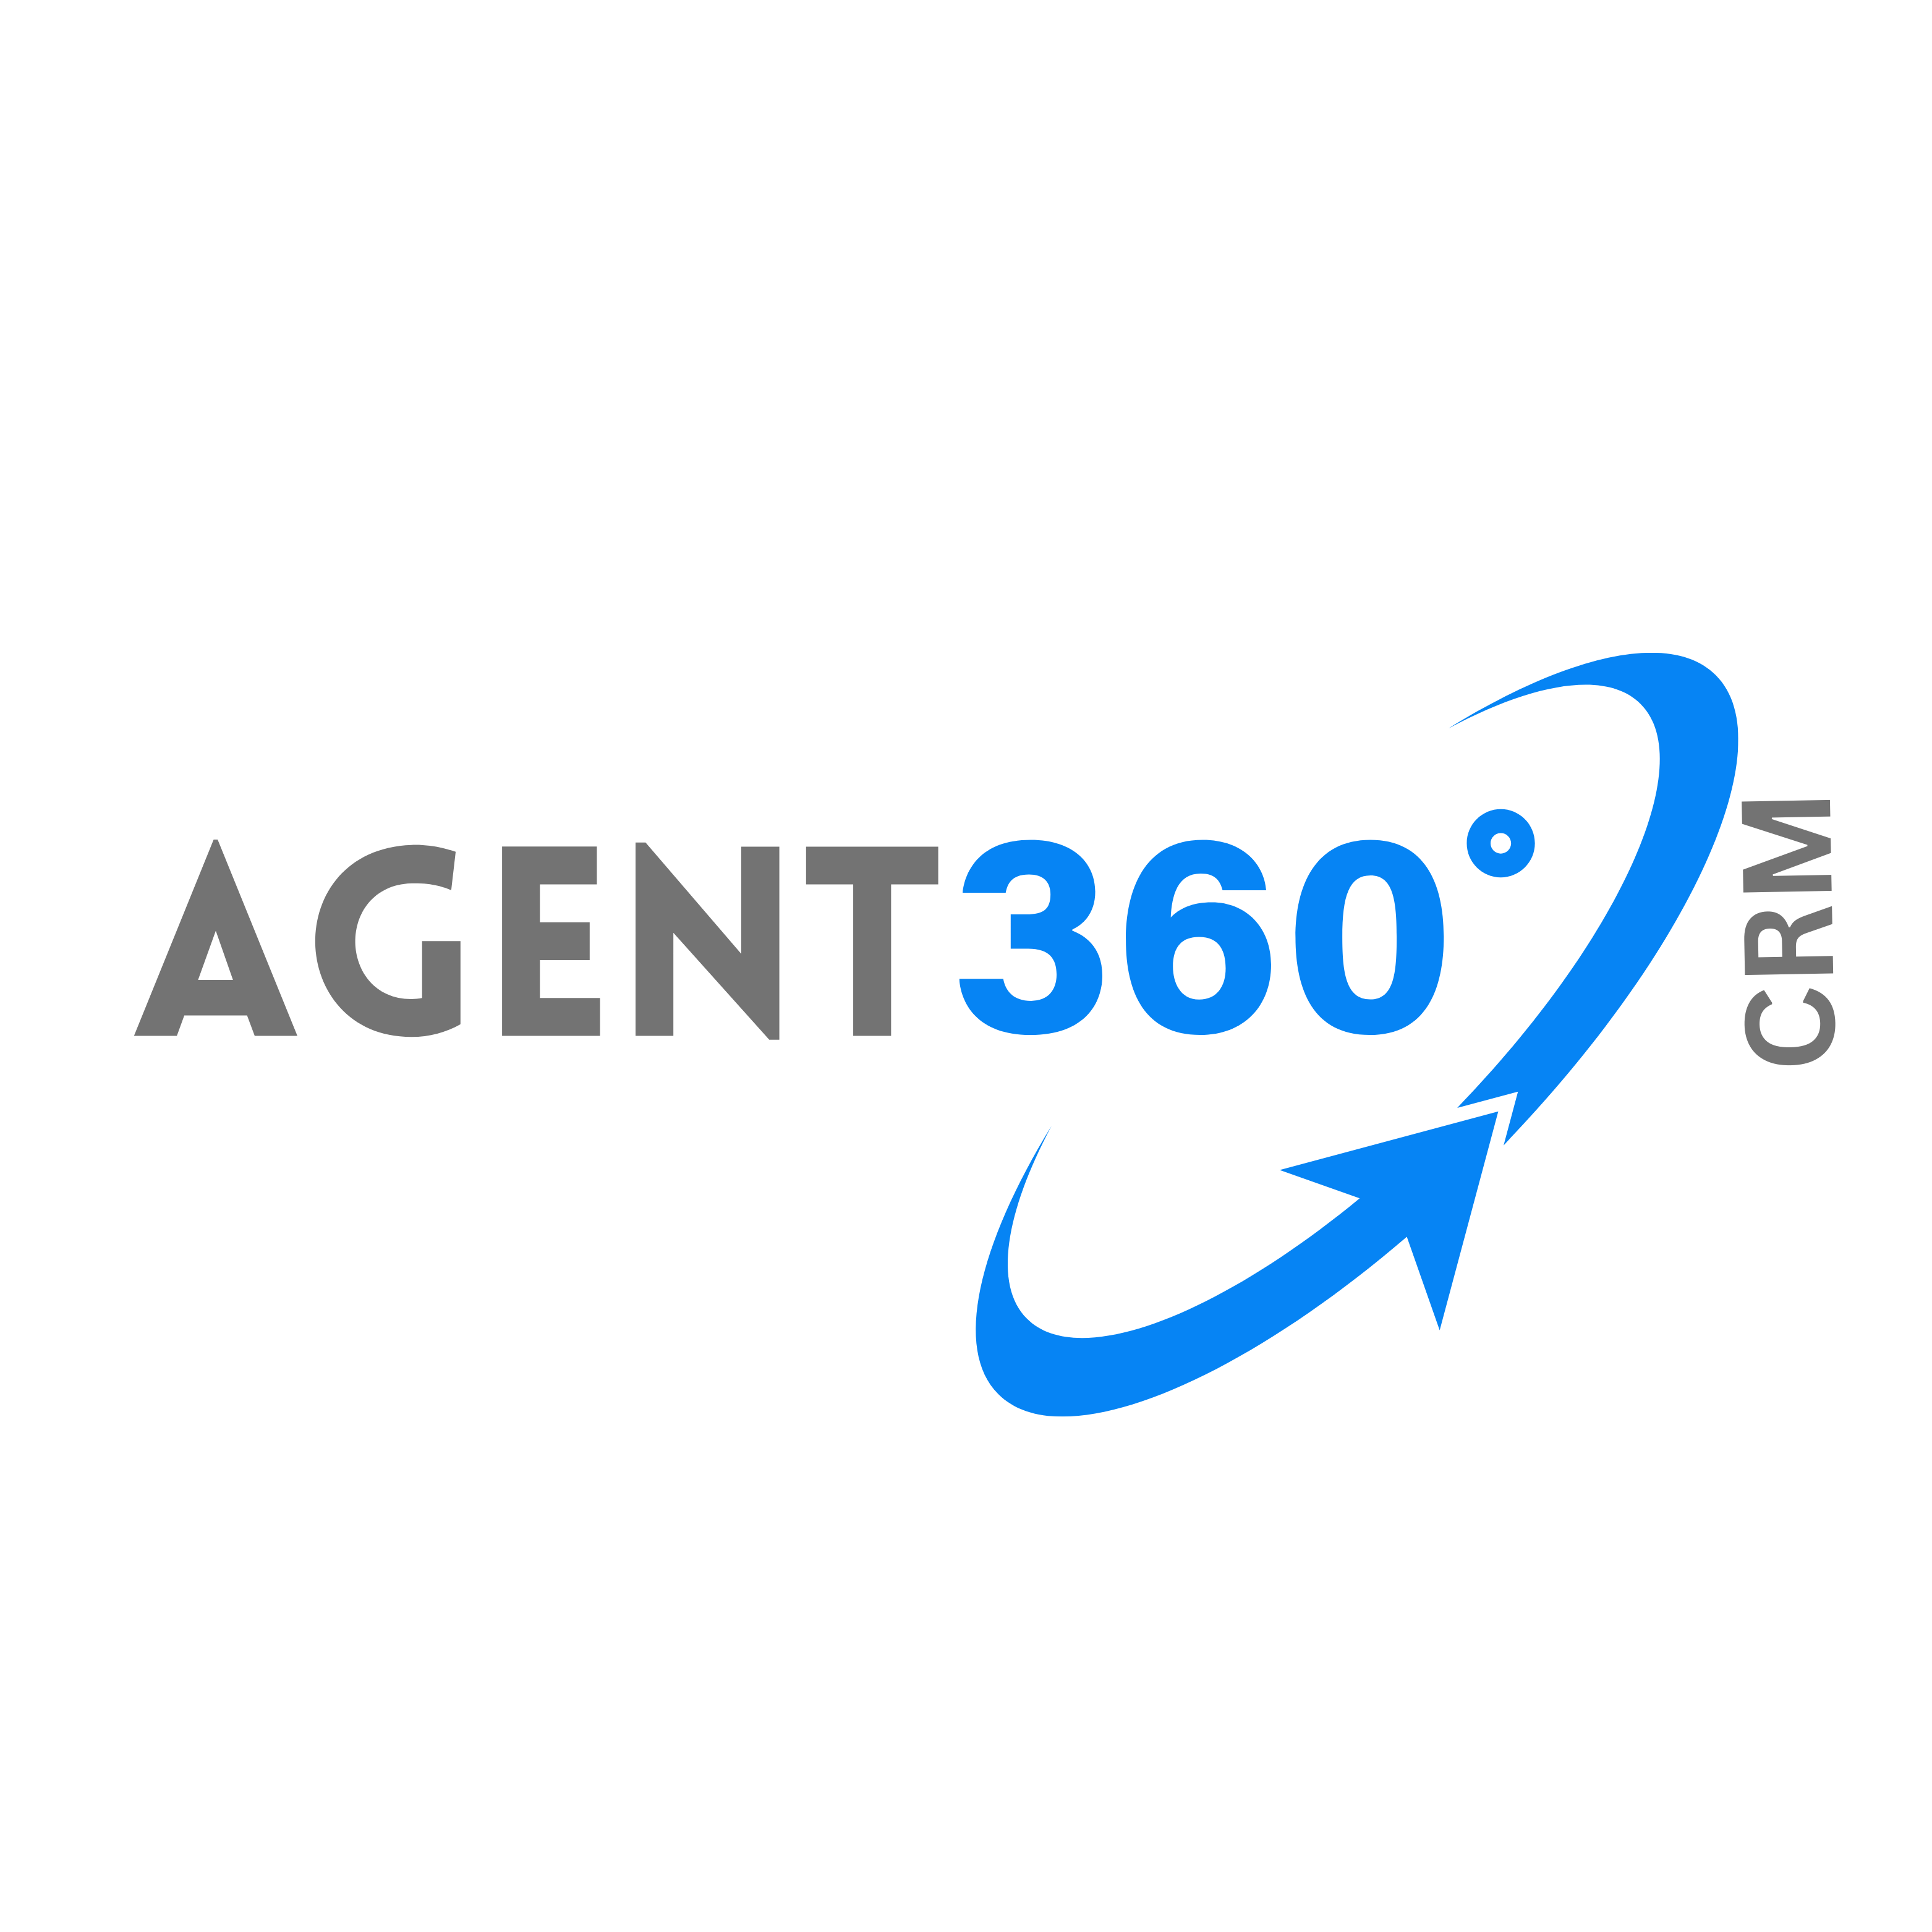 Agent360°CRM | "Agent360CRM"